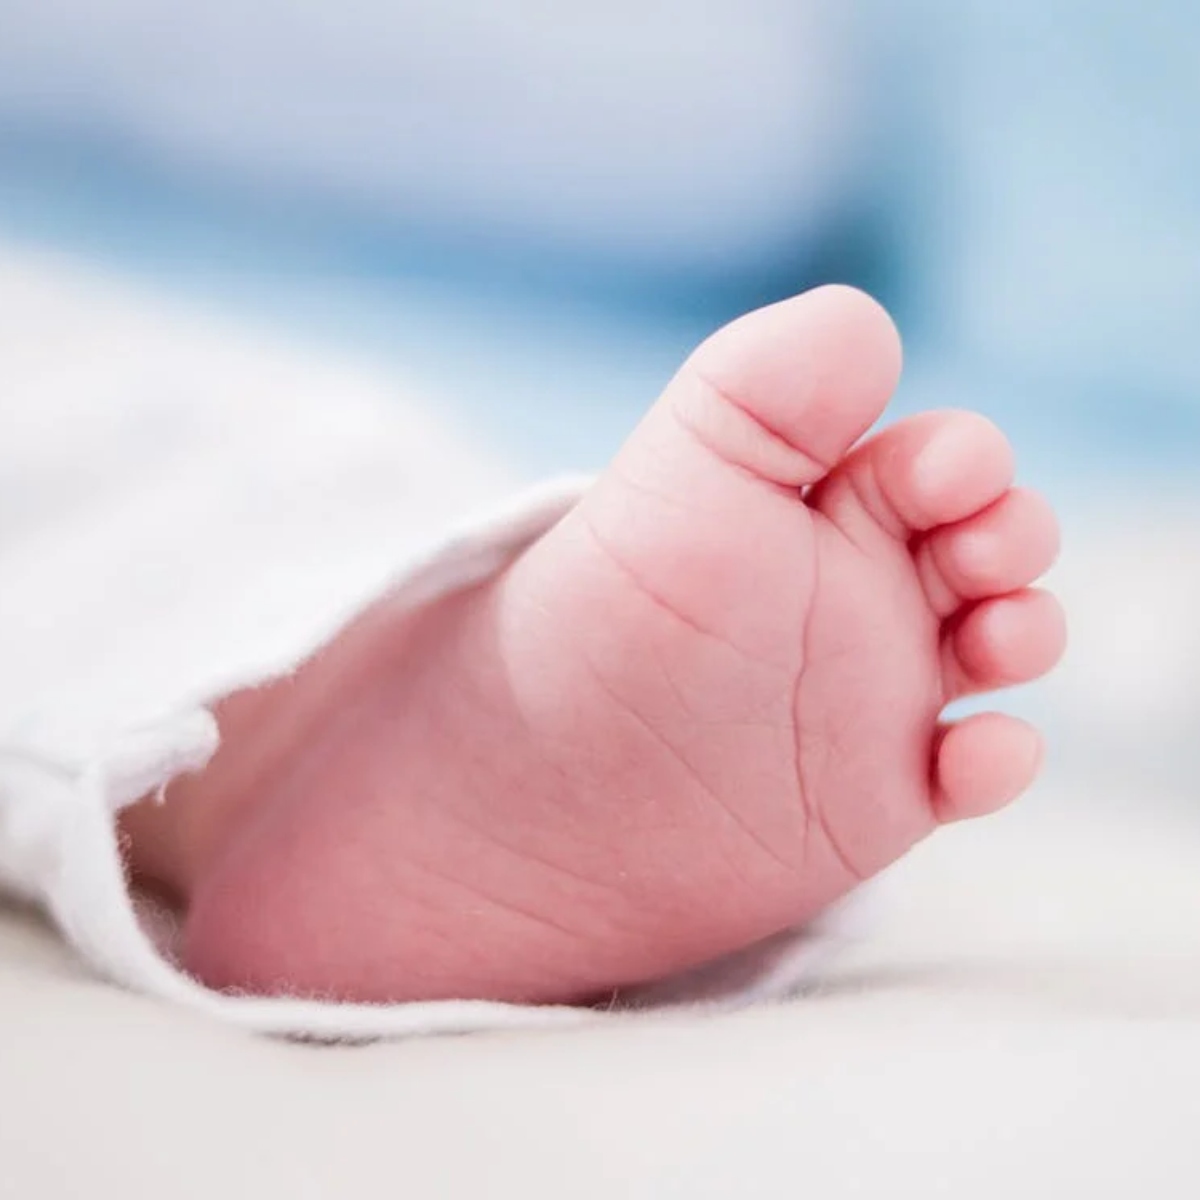  Mãe que teve morte cerebral dá a luz a bebê saudável após 11 semanas 